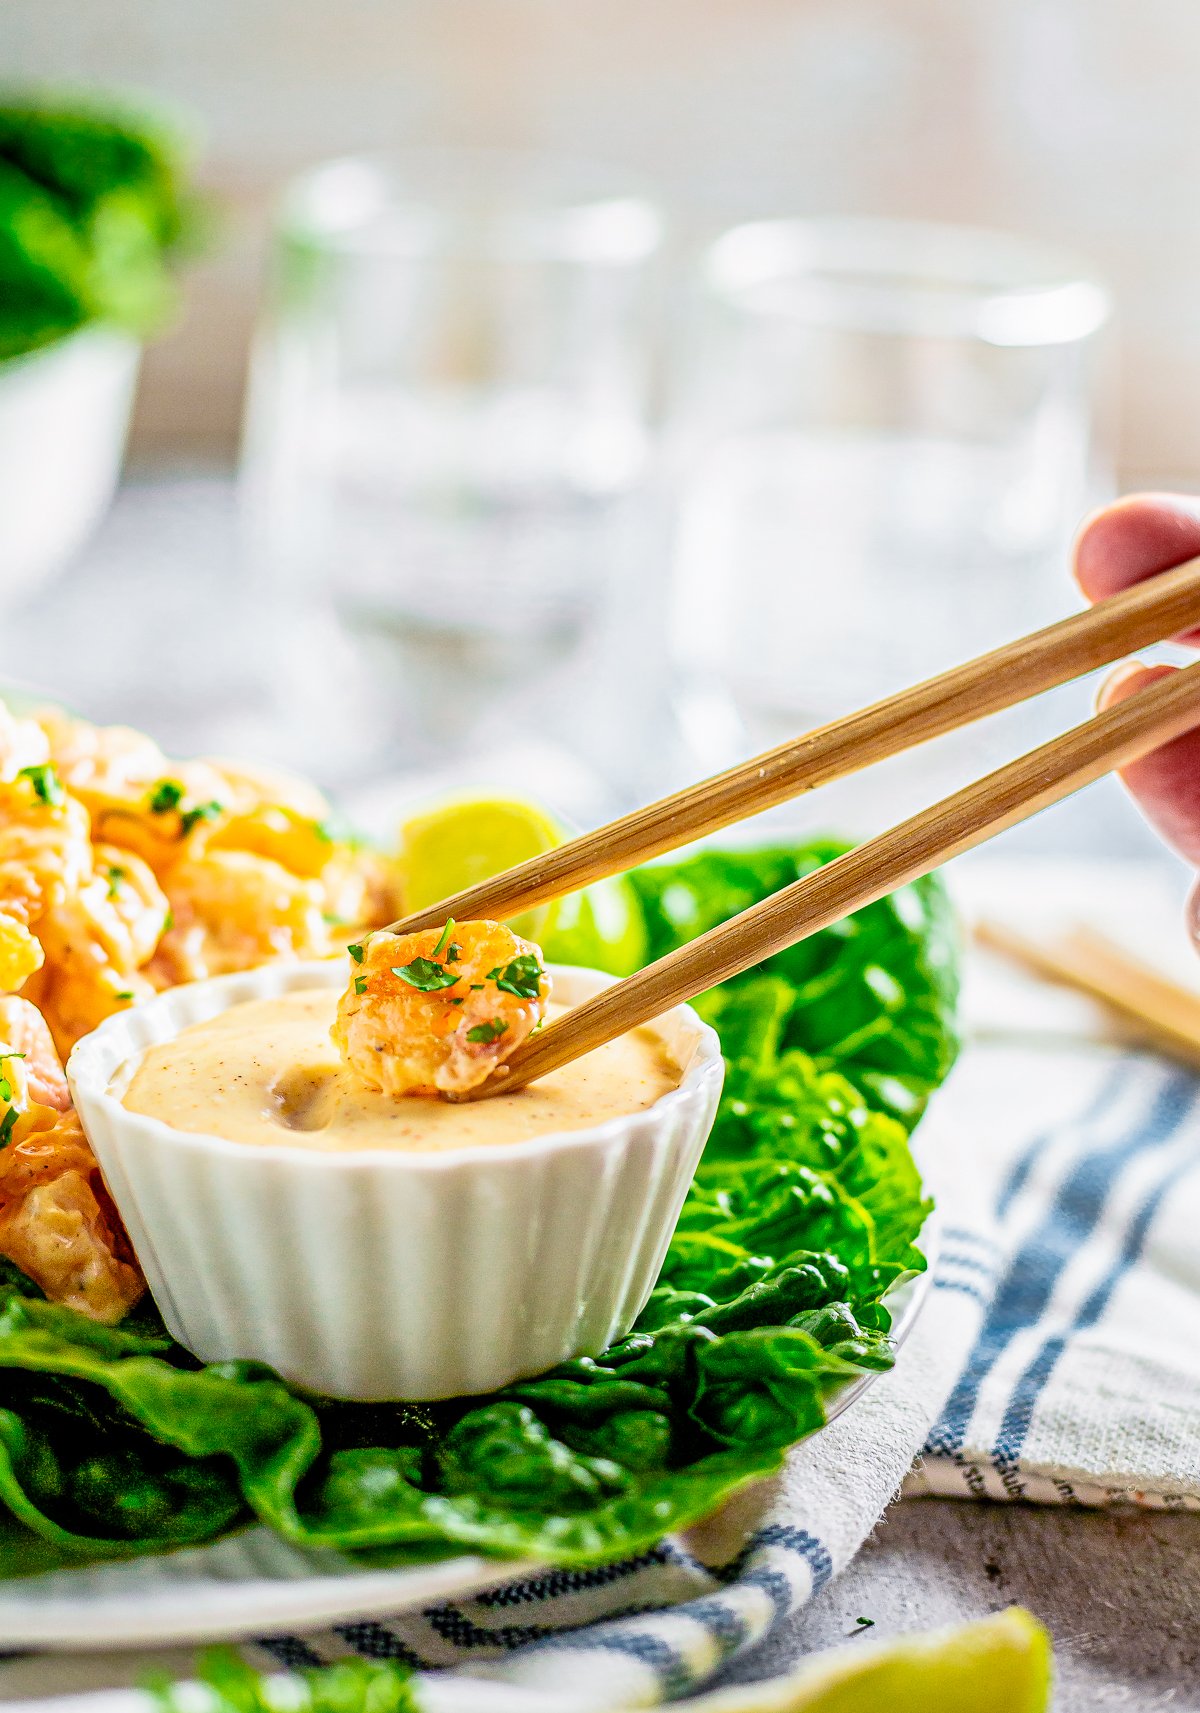 Chopsticks dipping one shrimp into dipping sauce.